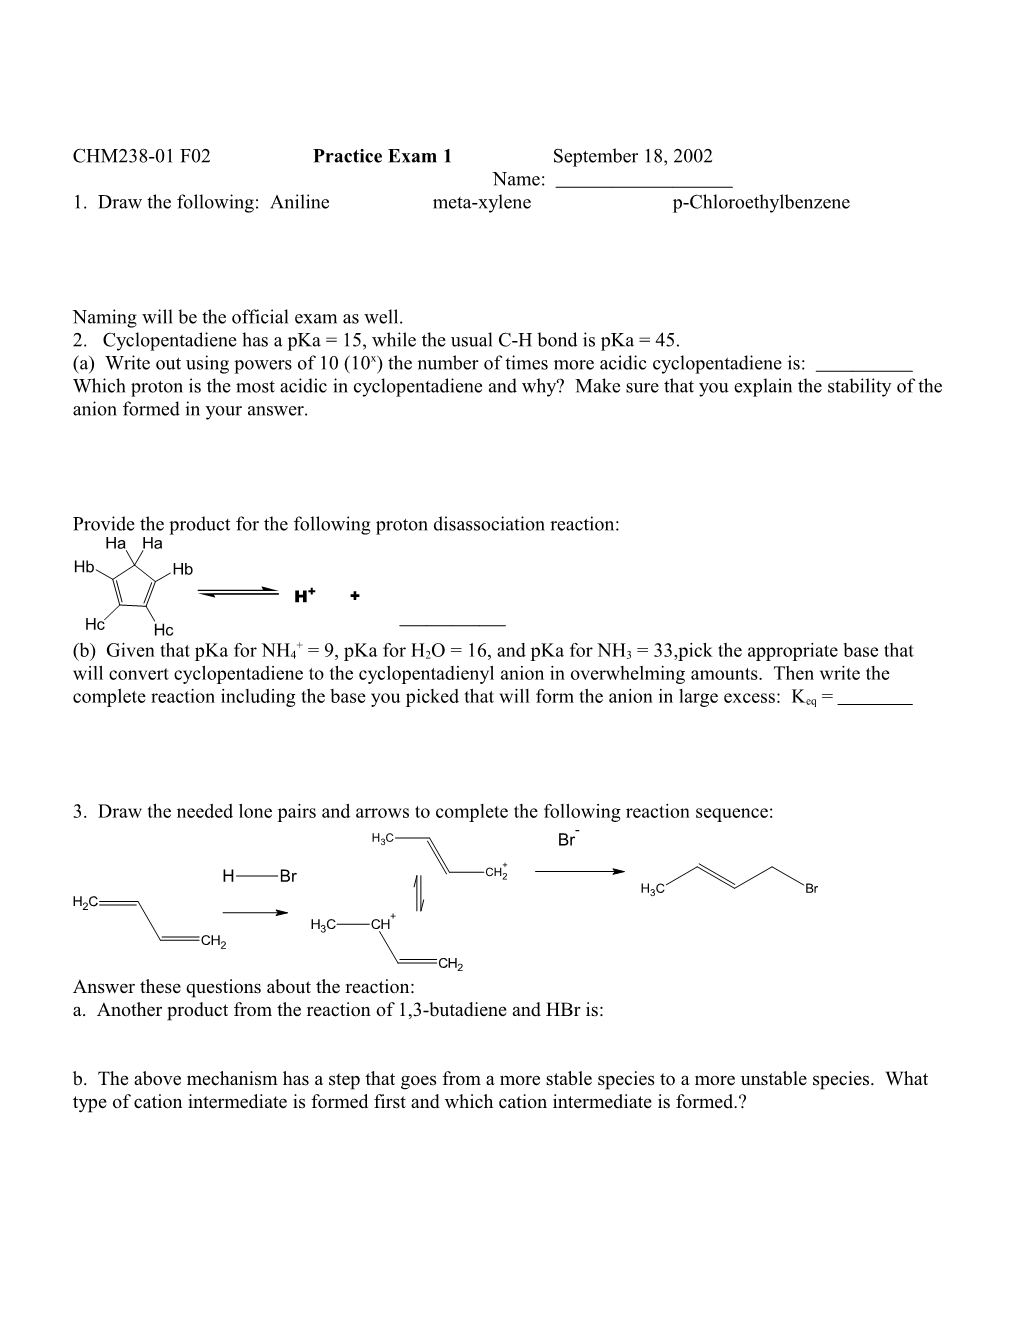 1. Draw the Following: Anilinemeta-Xylenep-Chloroethylbenzene